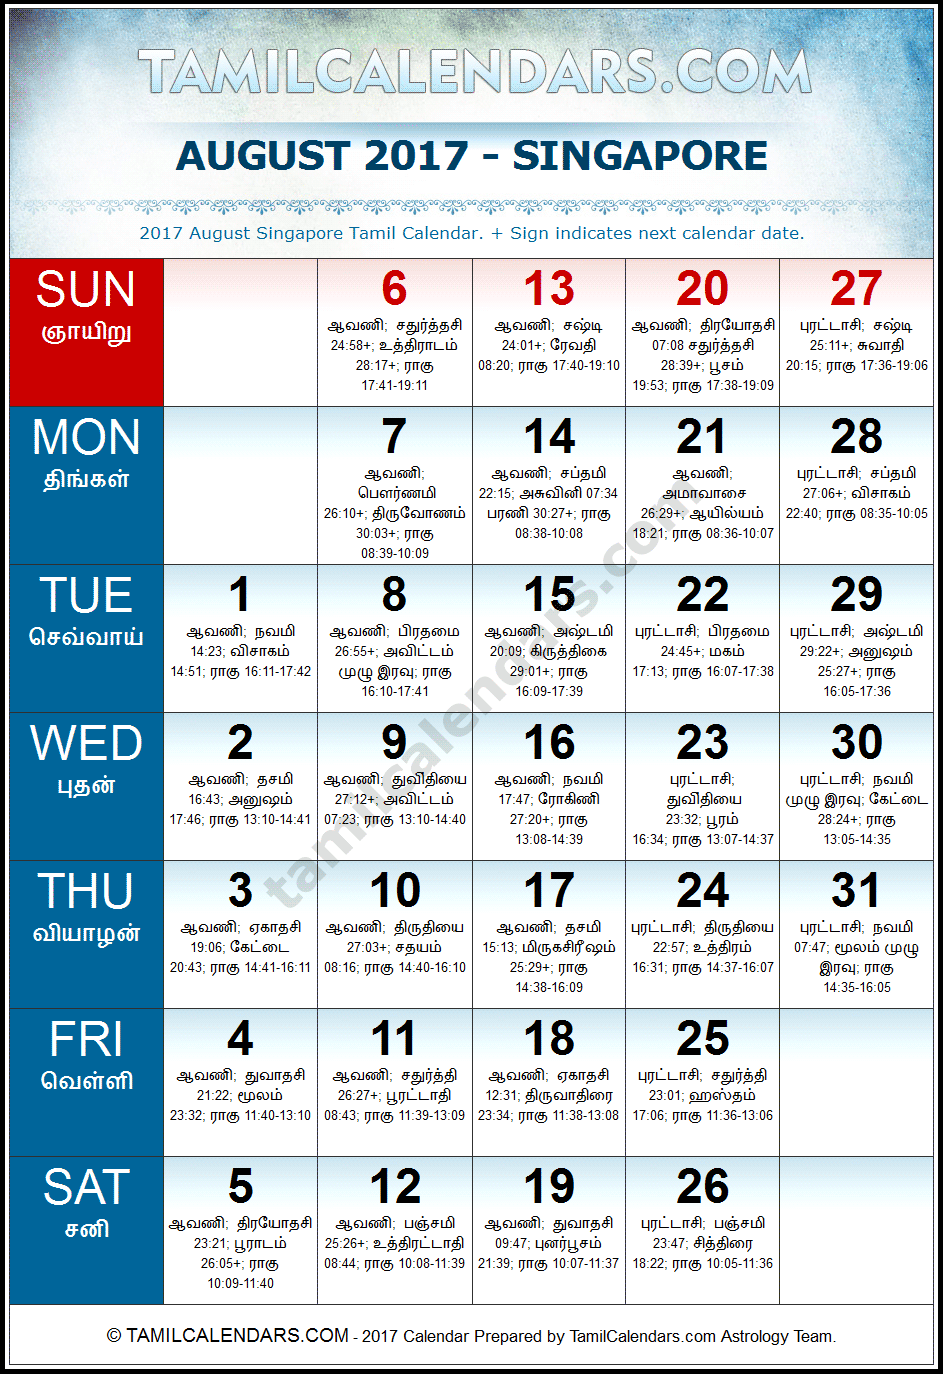 August 2017 Tamil Calendar for Singapore